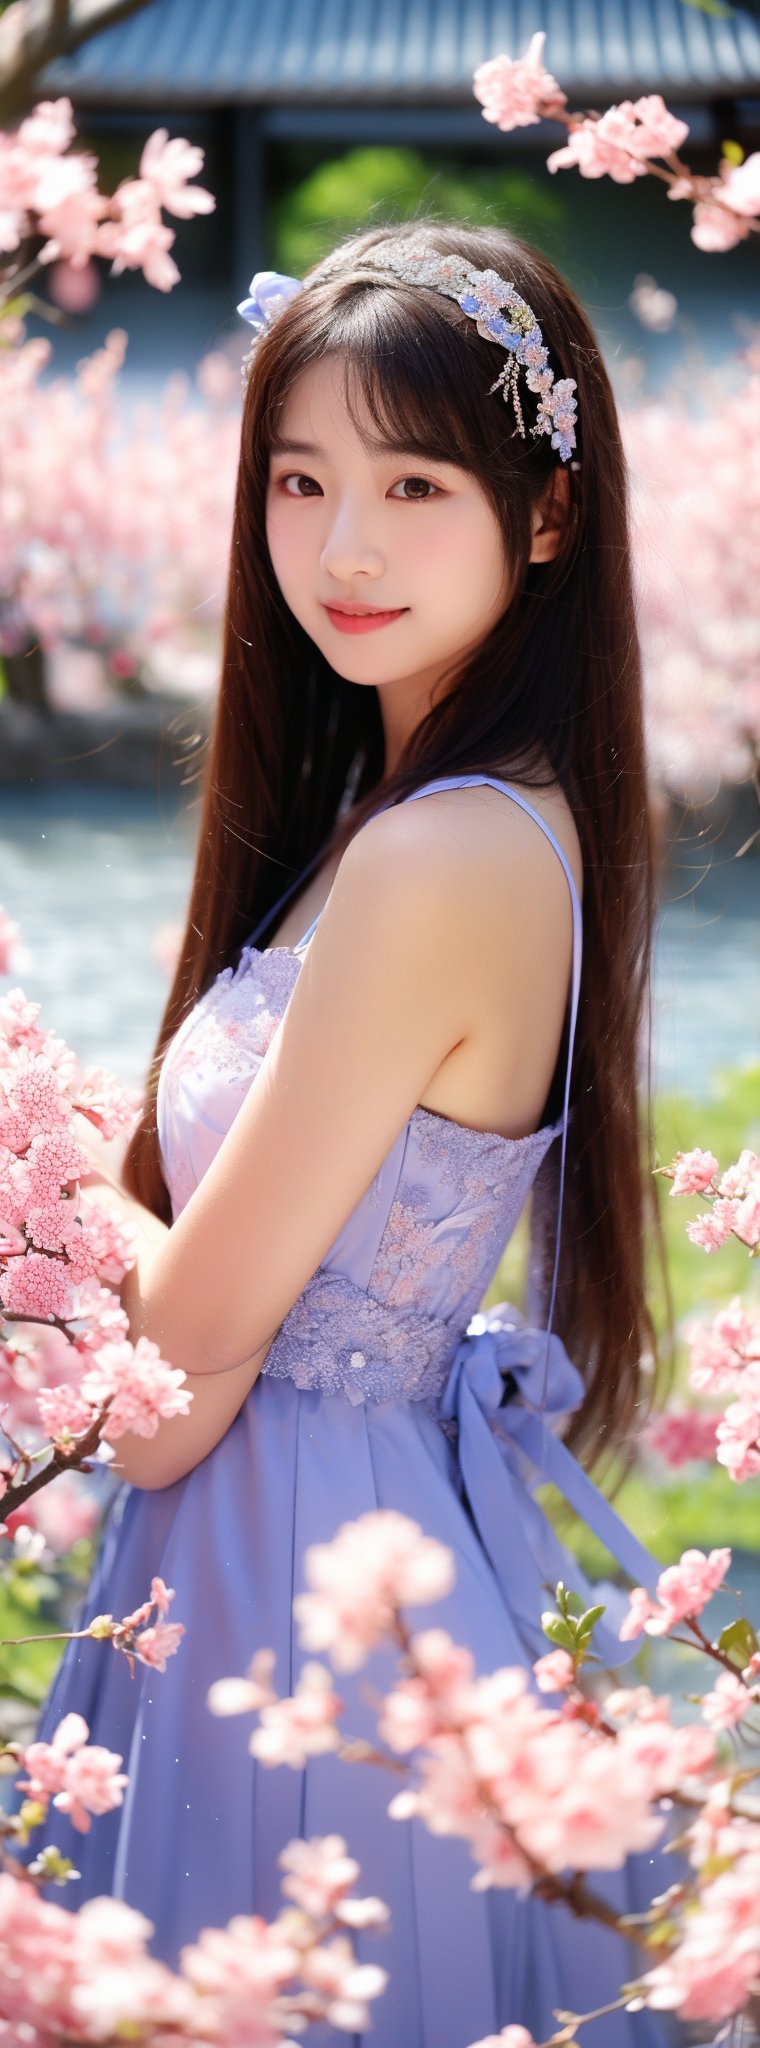 A 16-year-old Japanese beauty,in the sakura flowers.Turn slightly, purple dress,Beauty